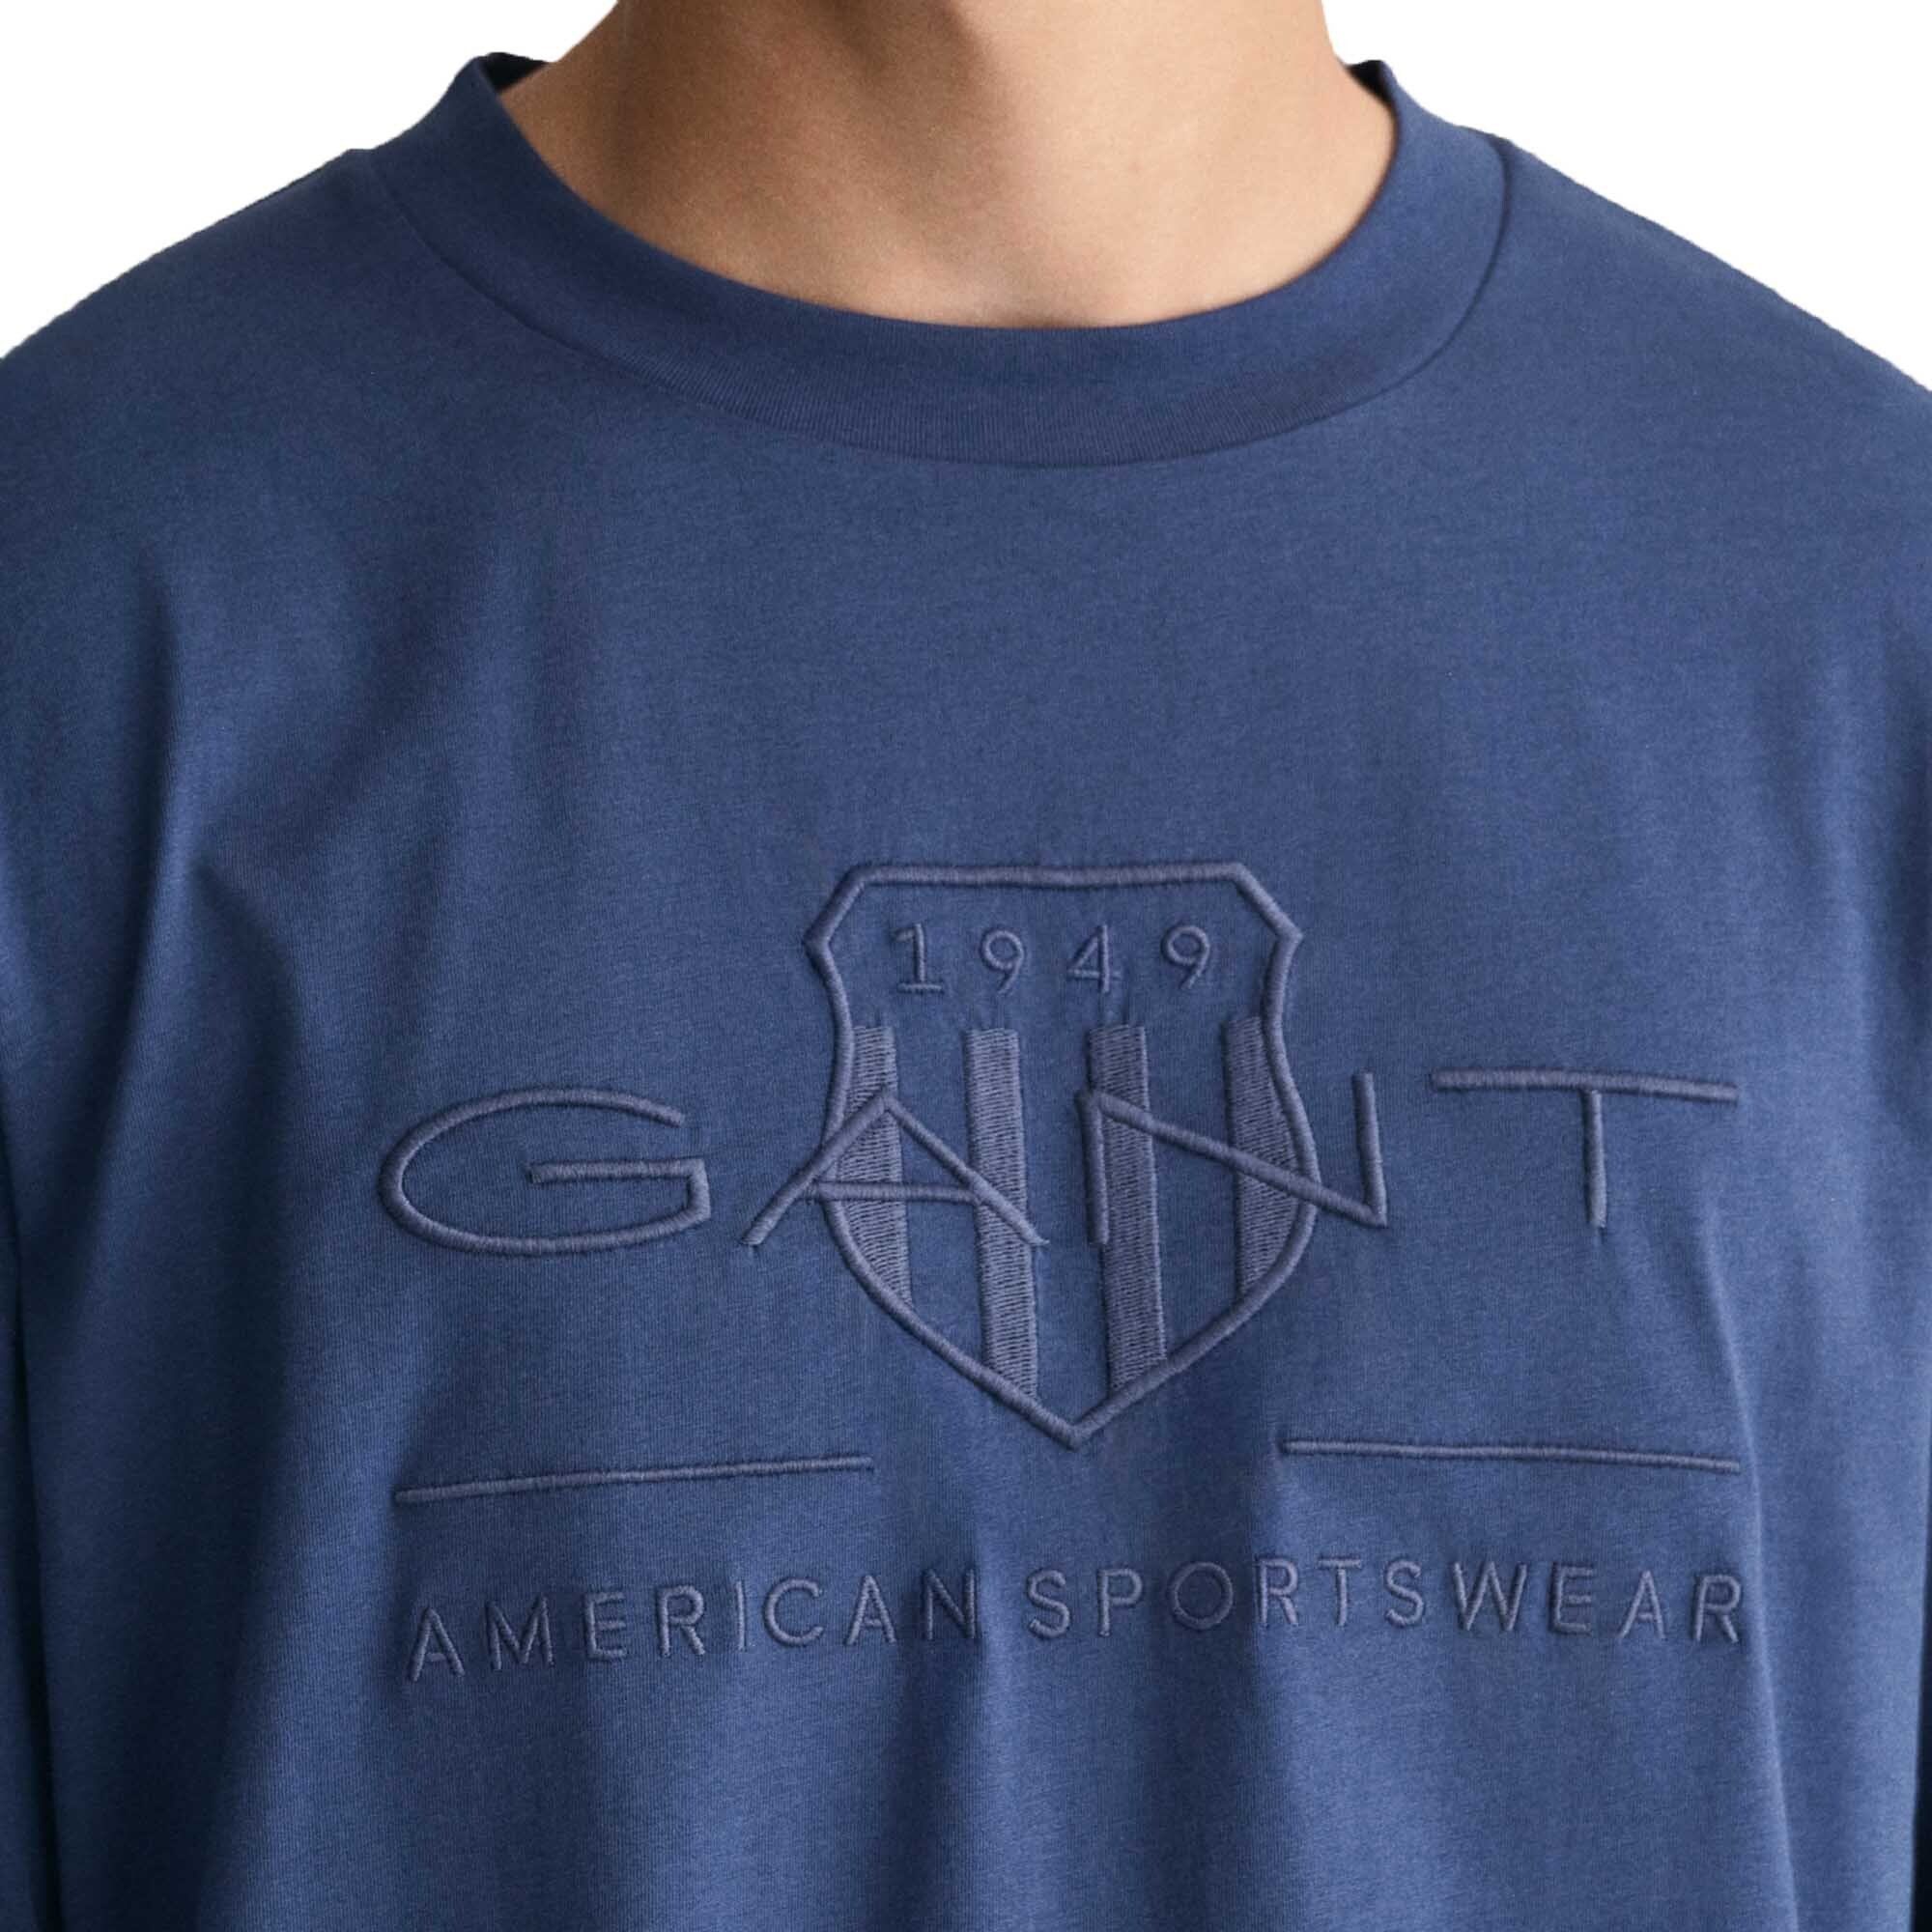 T-Shirt Herren - Gant TONAL Dunkelblau REG T-Shirt T-SHIRT SHIELD